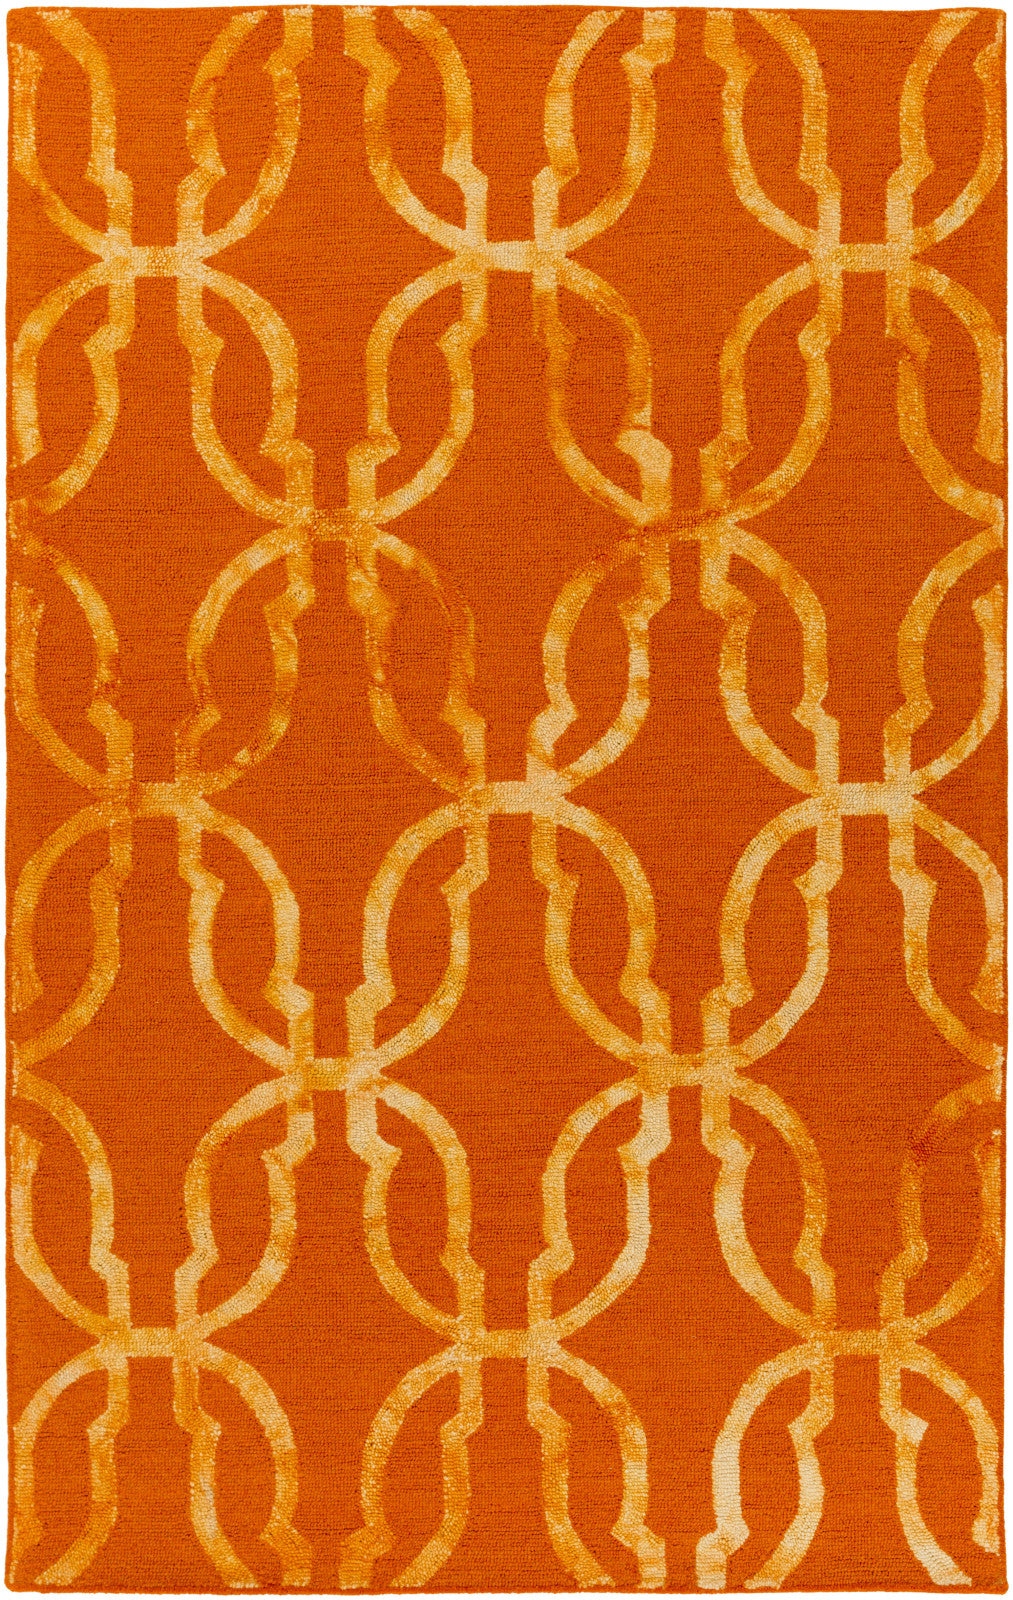 Artistic Weavers Organic Julia Bright Orange/Tangerine Area Rug main image